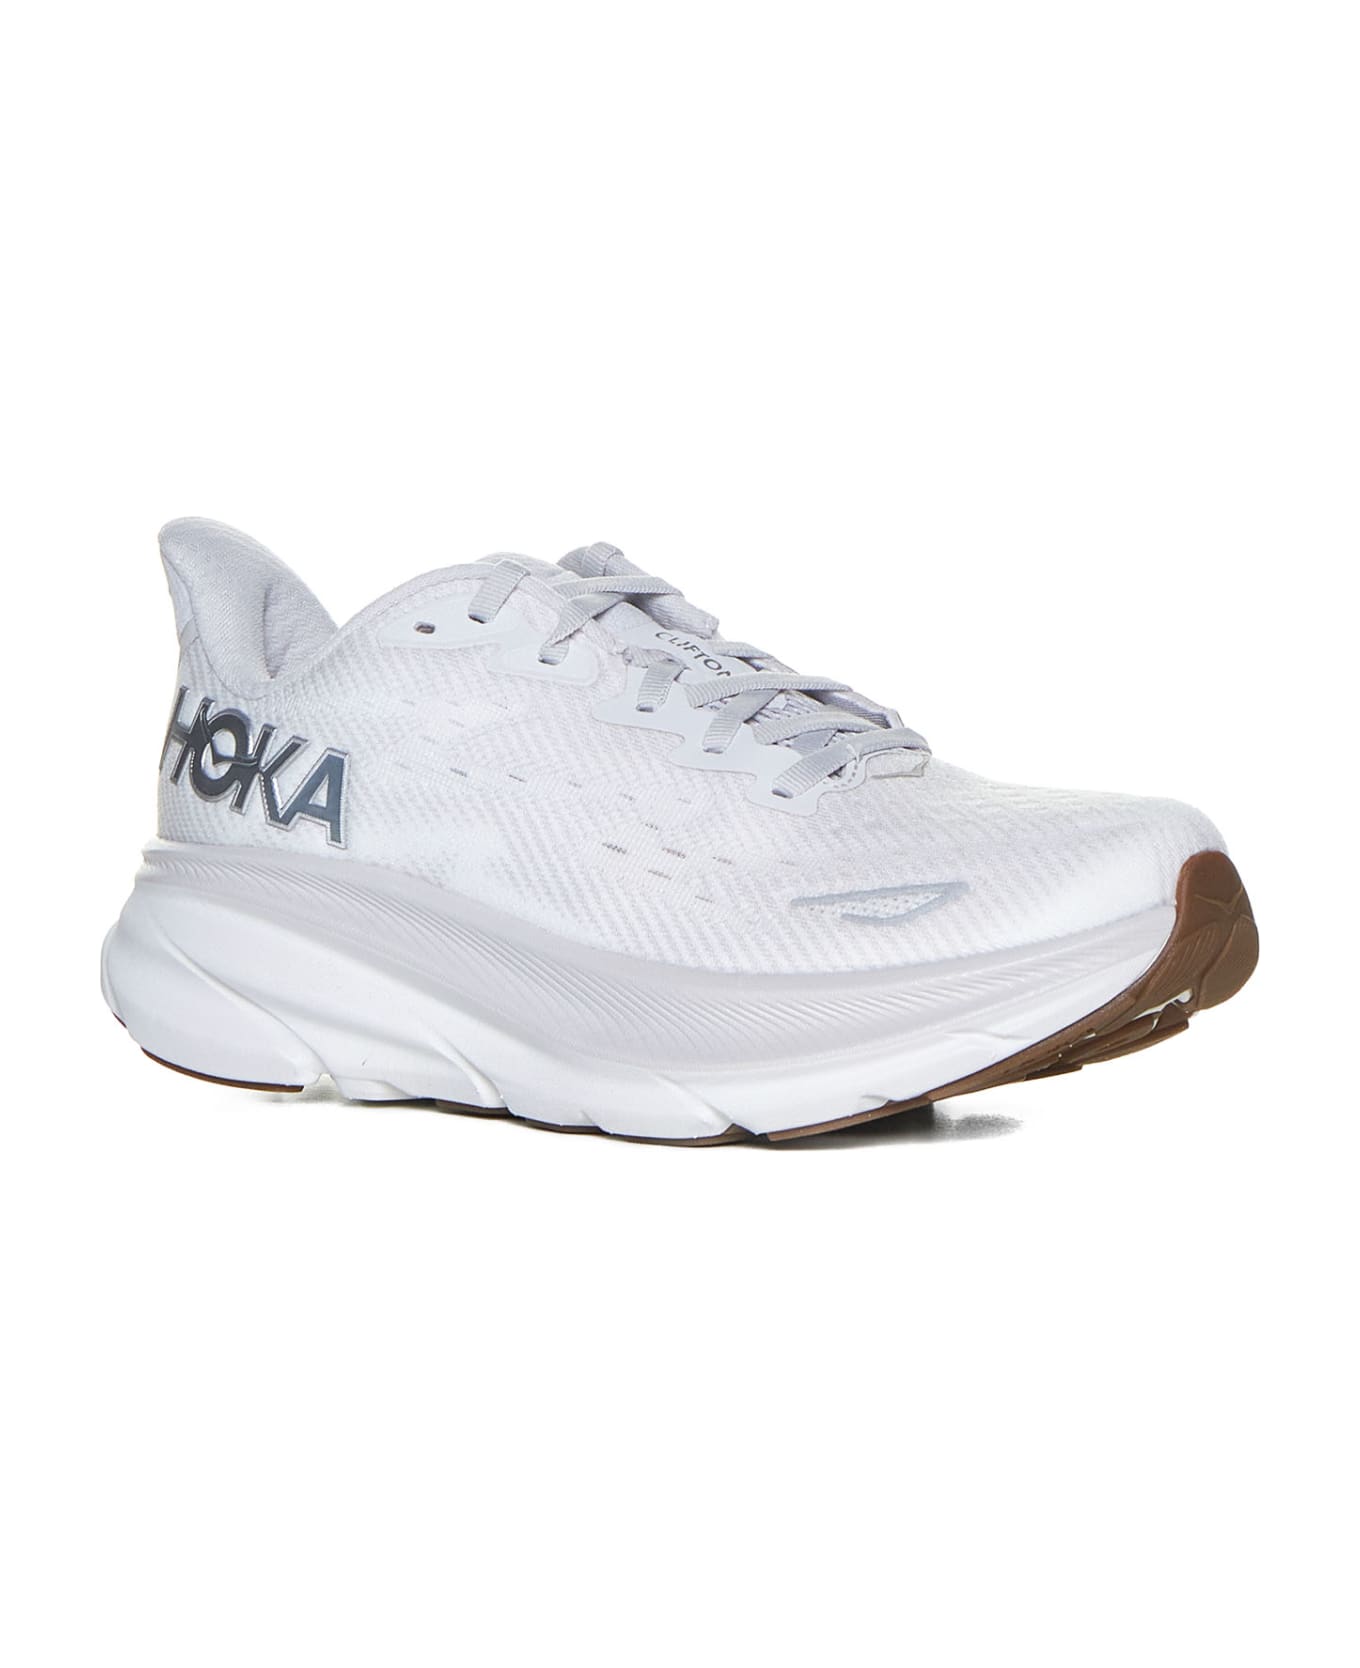 Hoka Sneakers - Nimbus cloud / white スニーカー